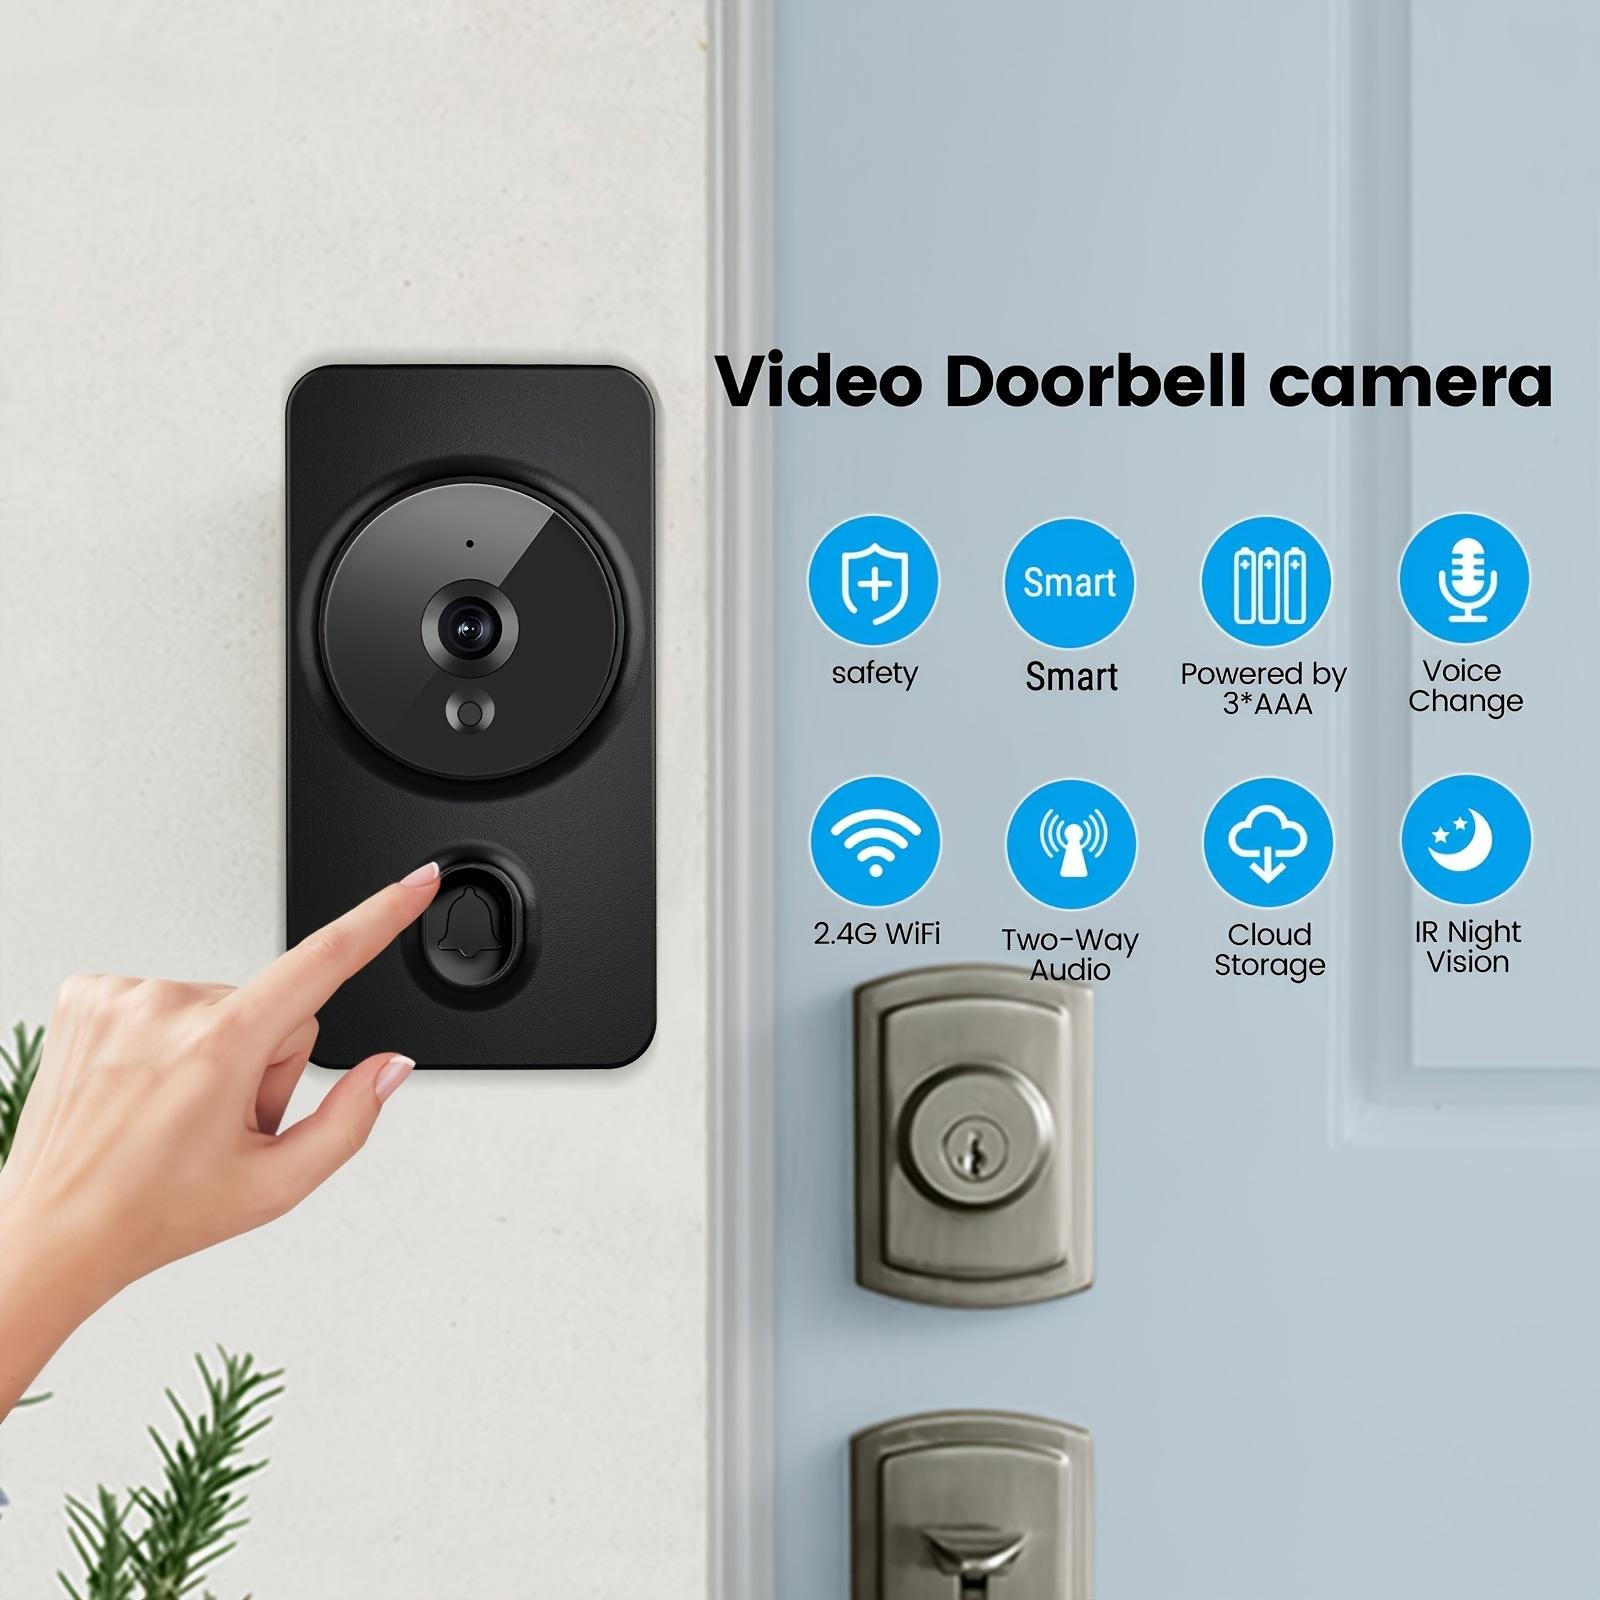 Video doorbell camera with multiple smart features.